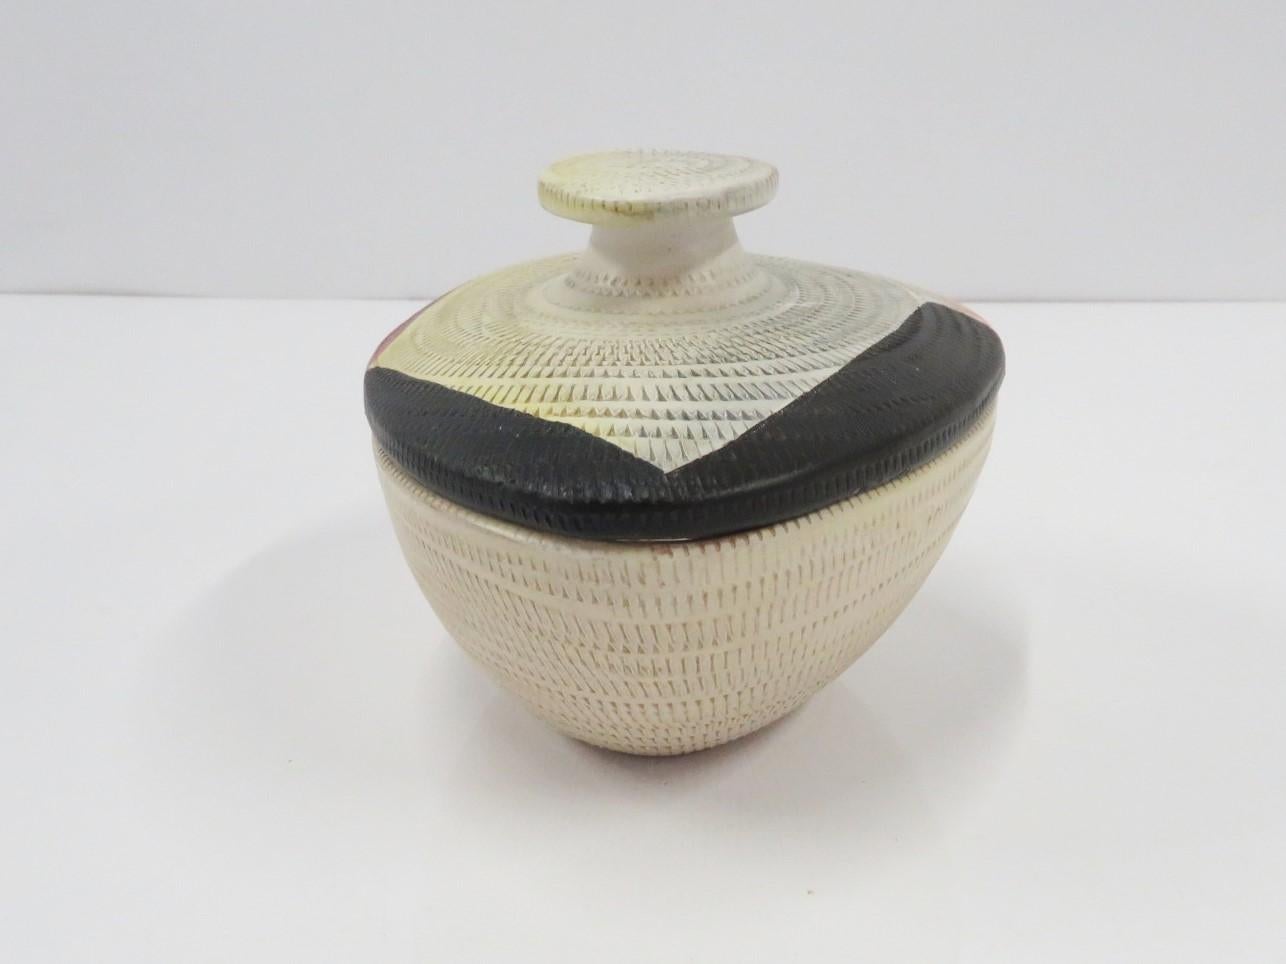 Ceramic Italian Mid-Century Modern Textured Covered Vessel by Aldo Londi for Bitossi